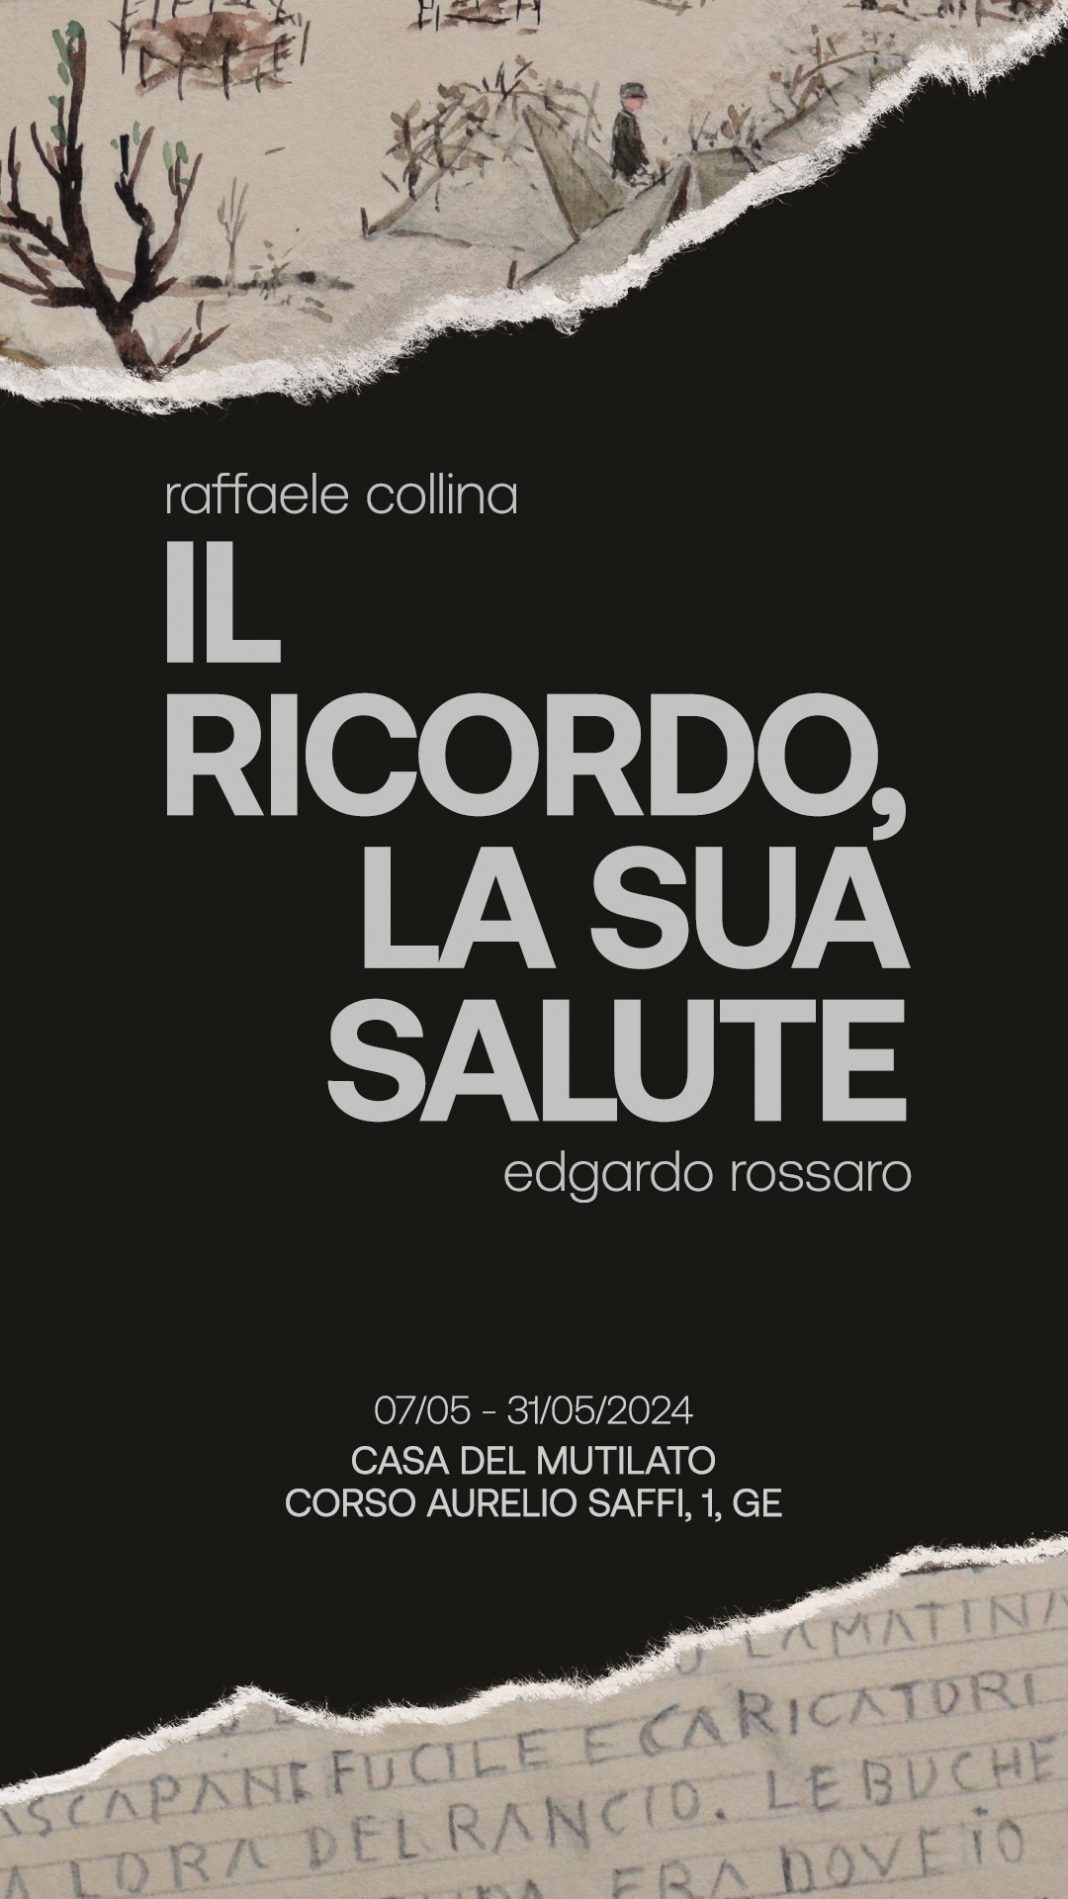 Raffaele Collina / Edgardo Rossaro – Il ricordo, la sua salutehttps://www.exibart.com/repository/media/formidable/11/img/a52/collina-rossaro-1920-1068x1899.jpg